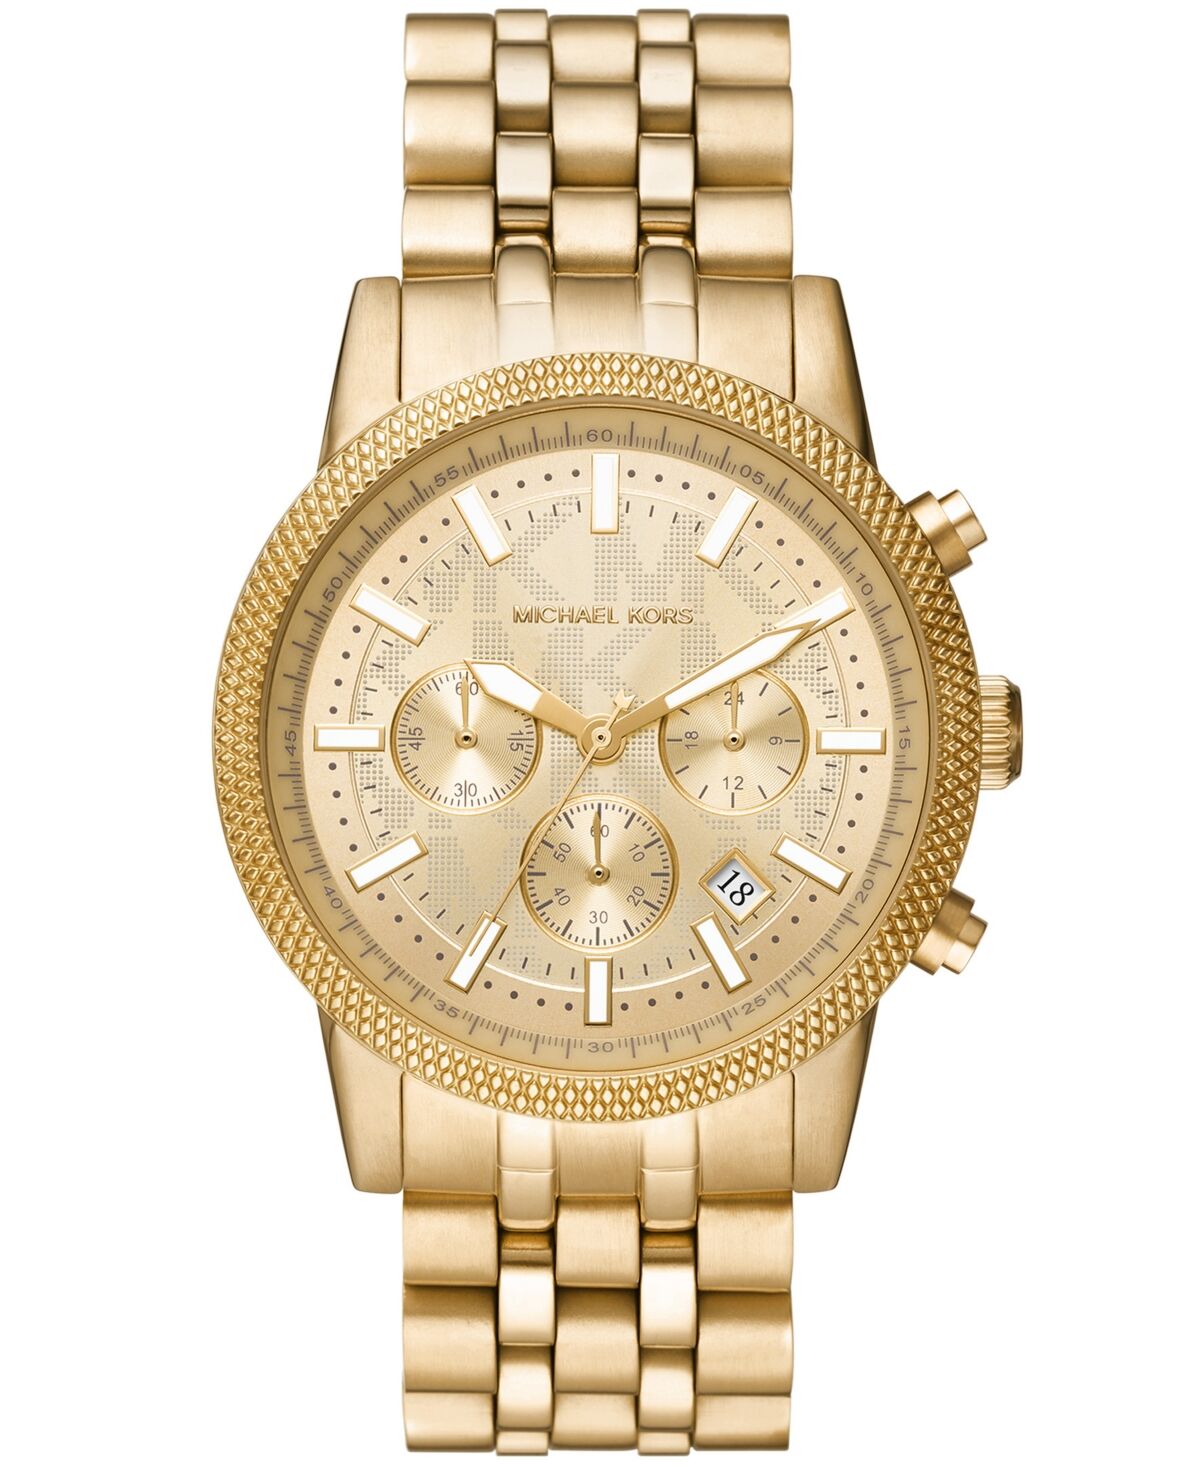 Michael Kors Men's Hutton Chronograph Gold-Tone Stainless Steel Bracelet Watch 43mm - Gold-Tone